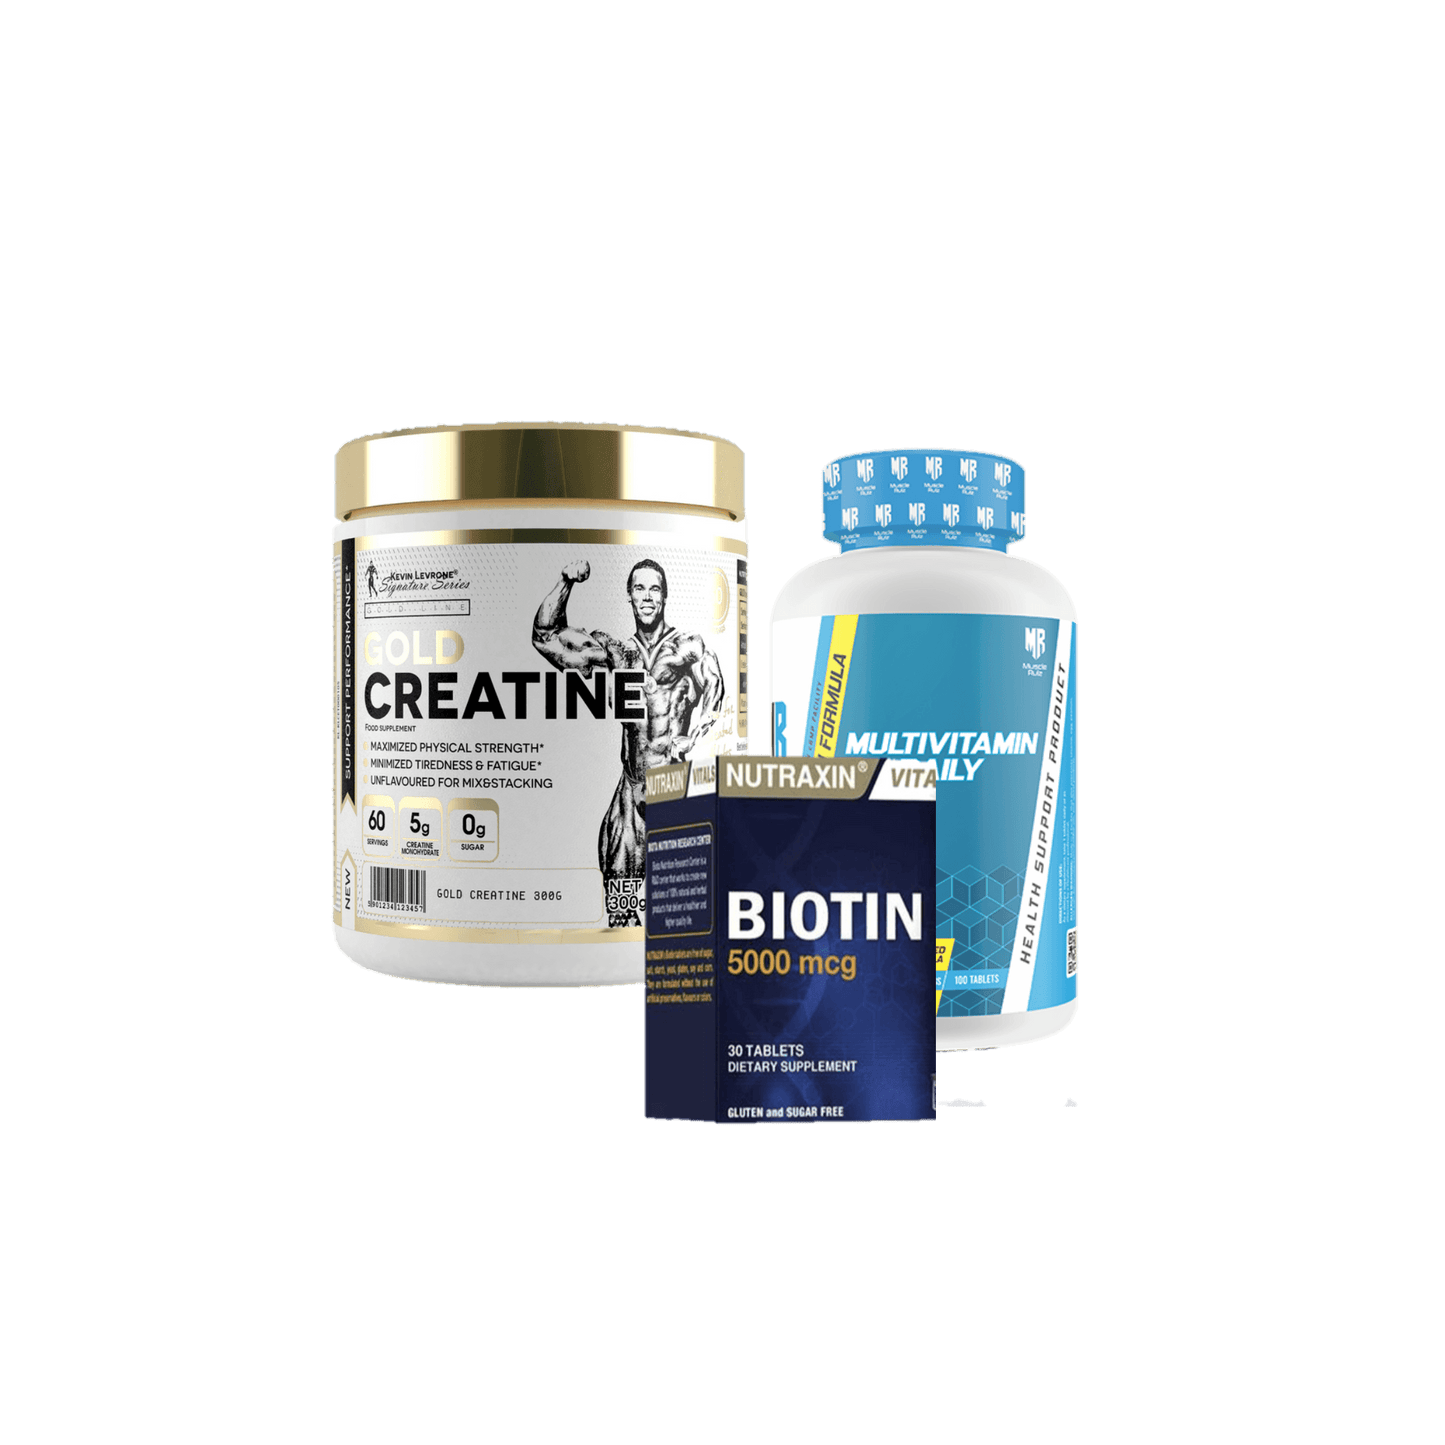 Gold Creatine + Multi Vitamins + Biotin - The Supplements Factory